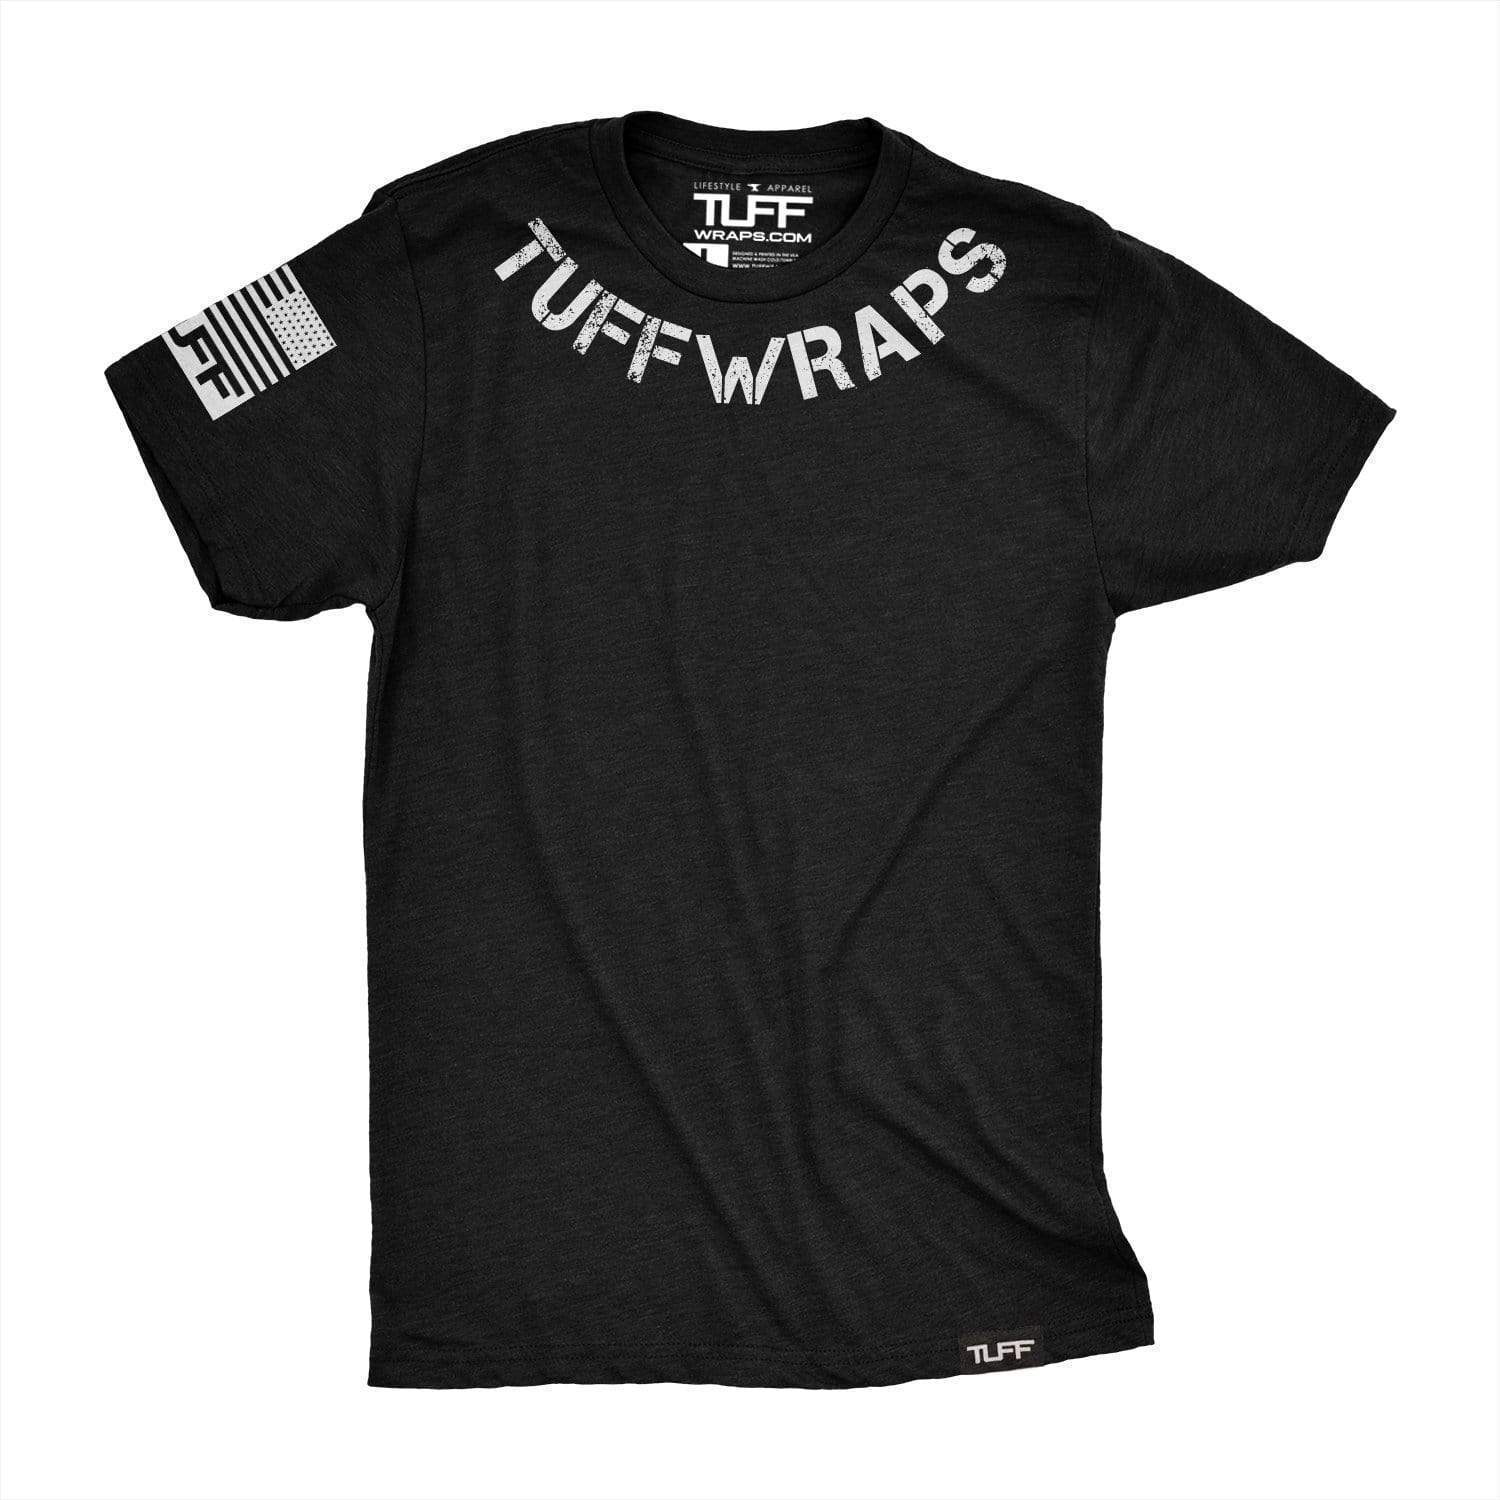 TUFF Curve Tee - Black T-shirt